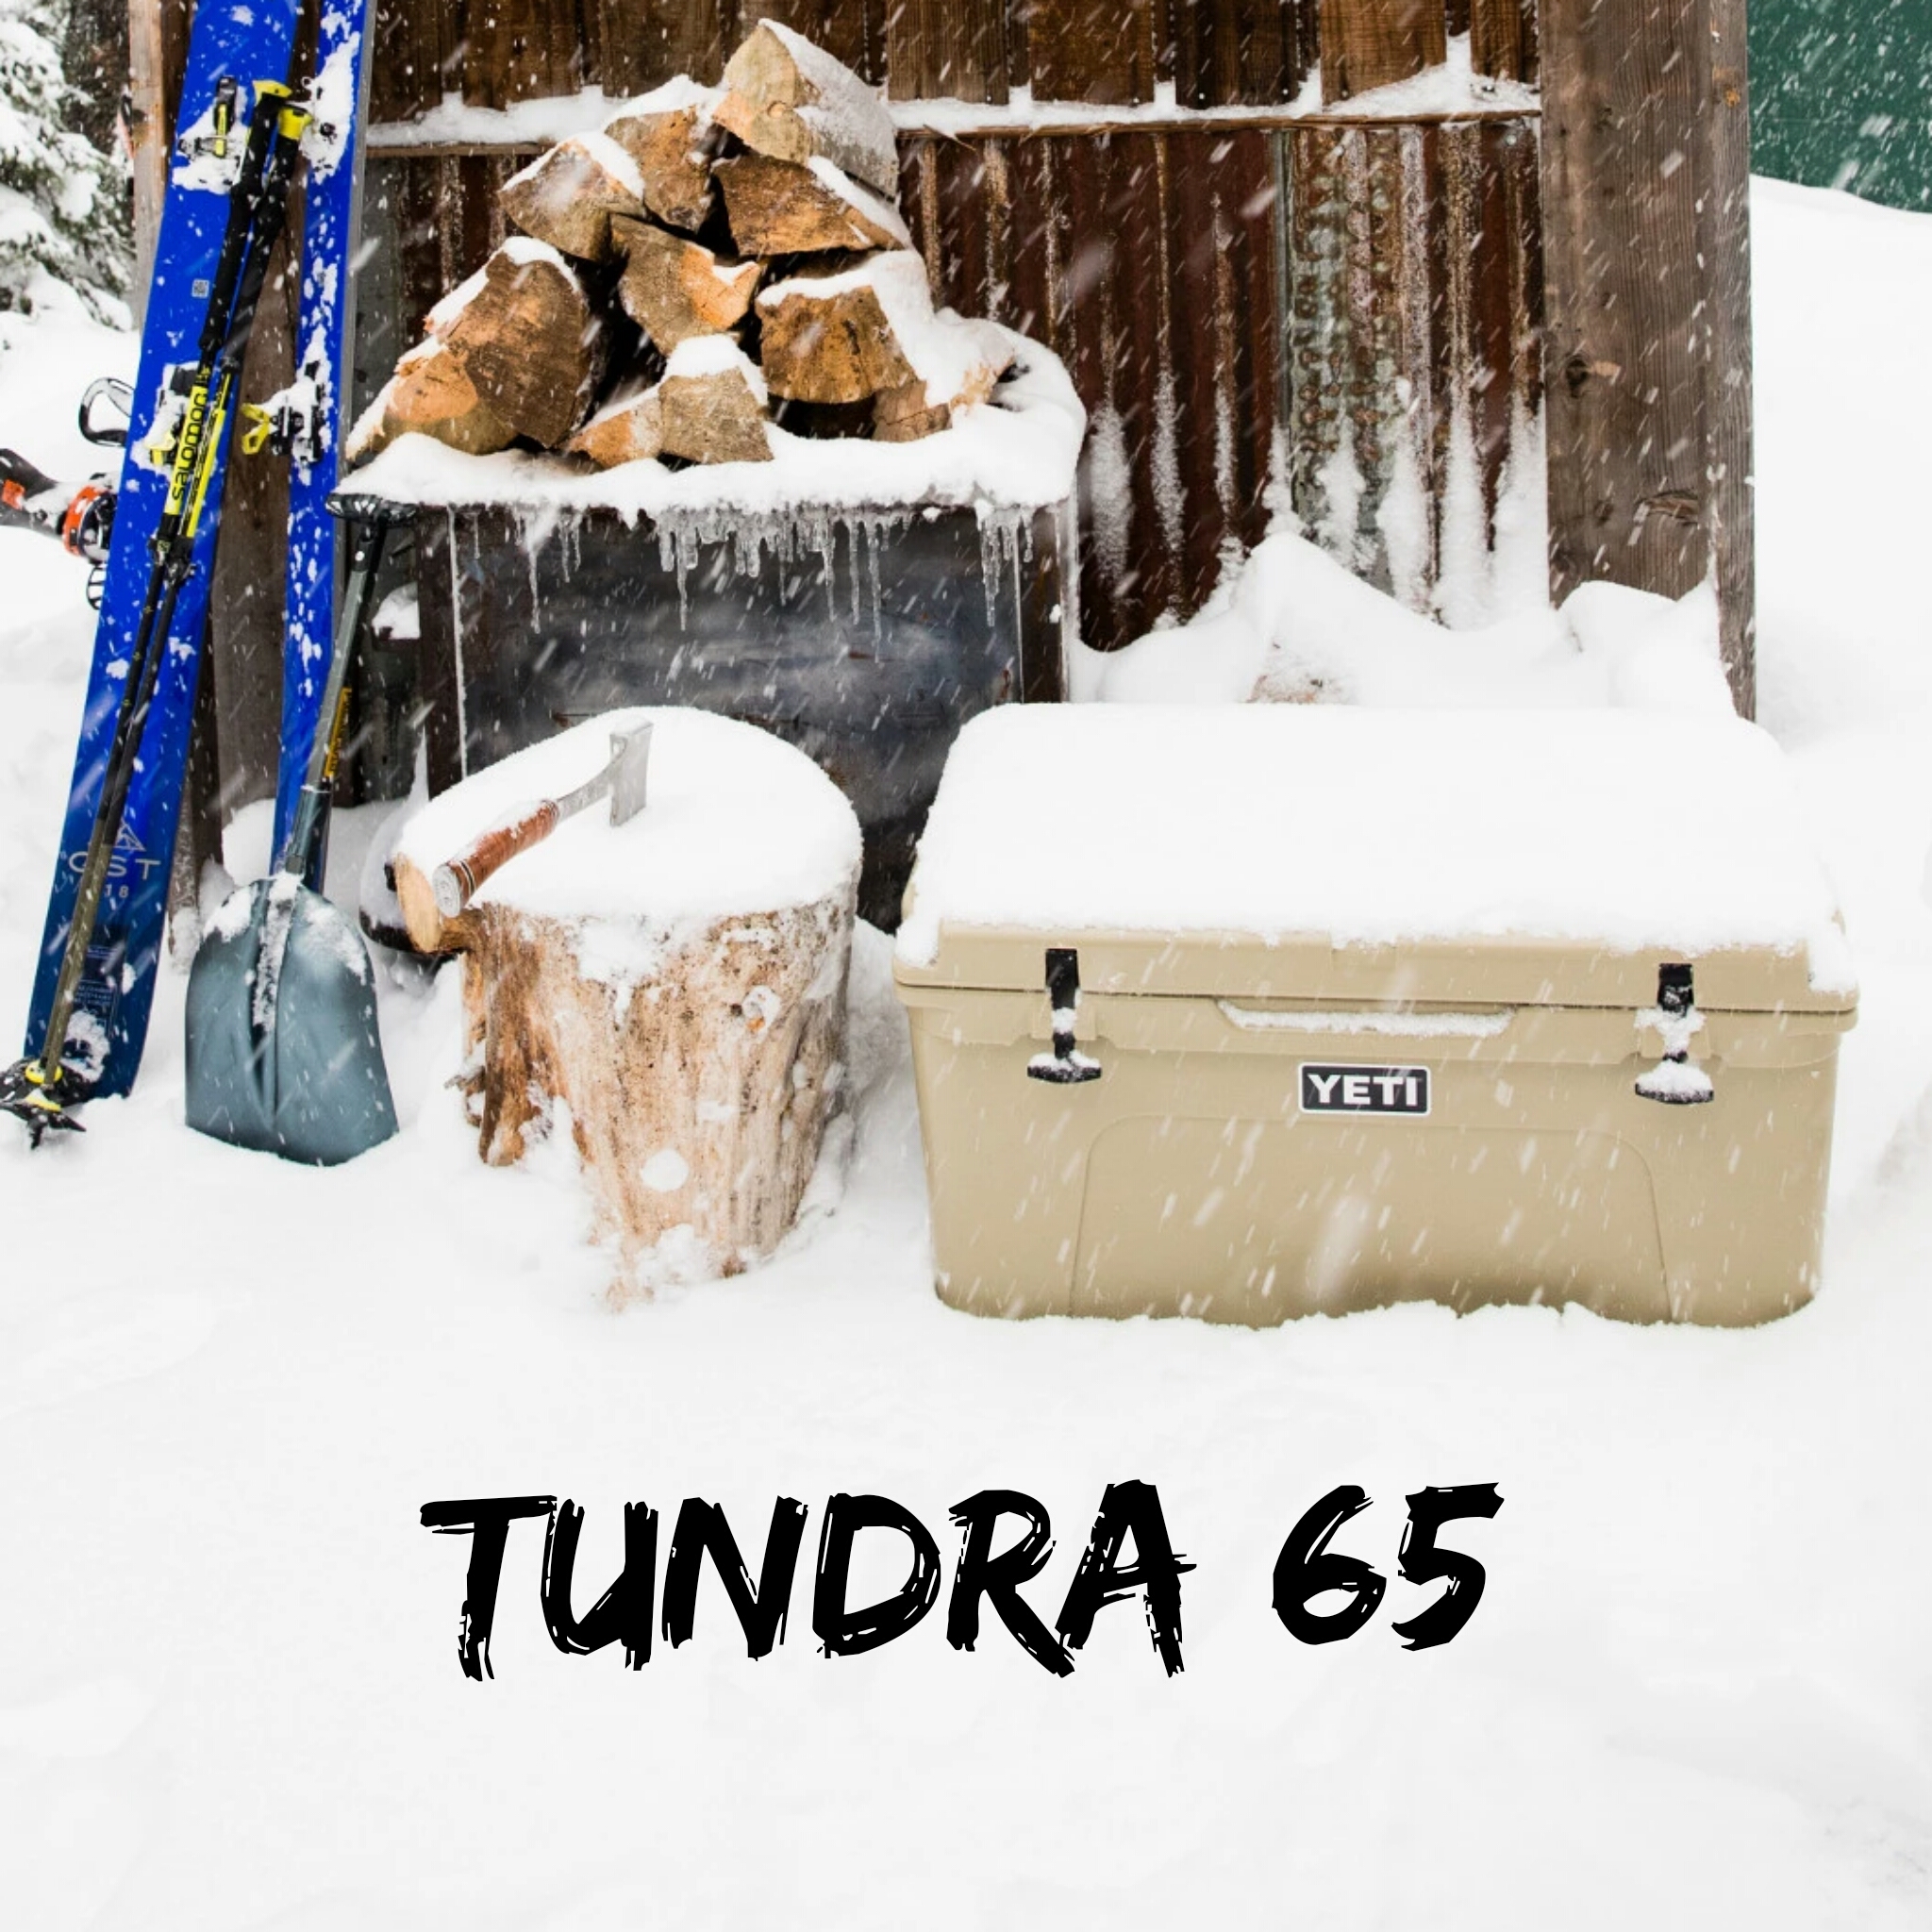 YETI YT65W Tundra 65 Coolers